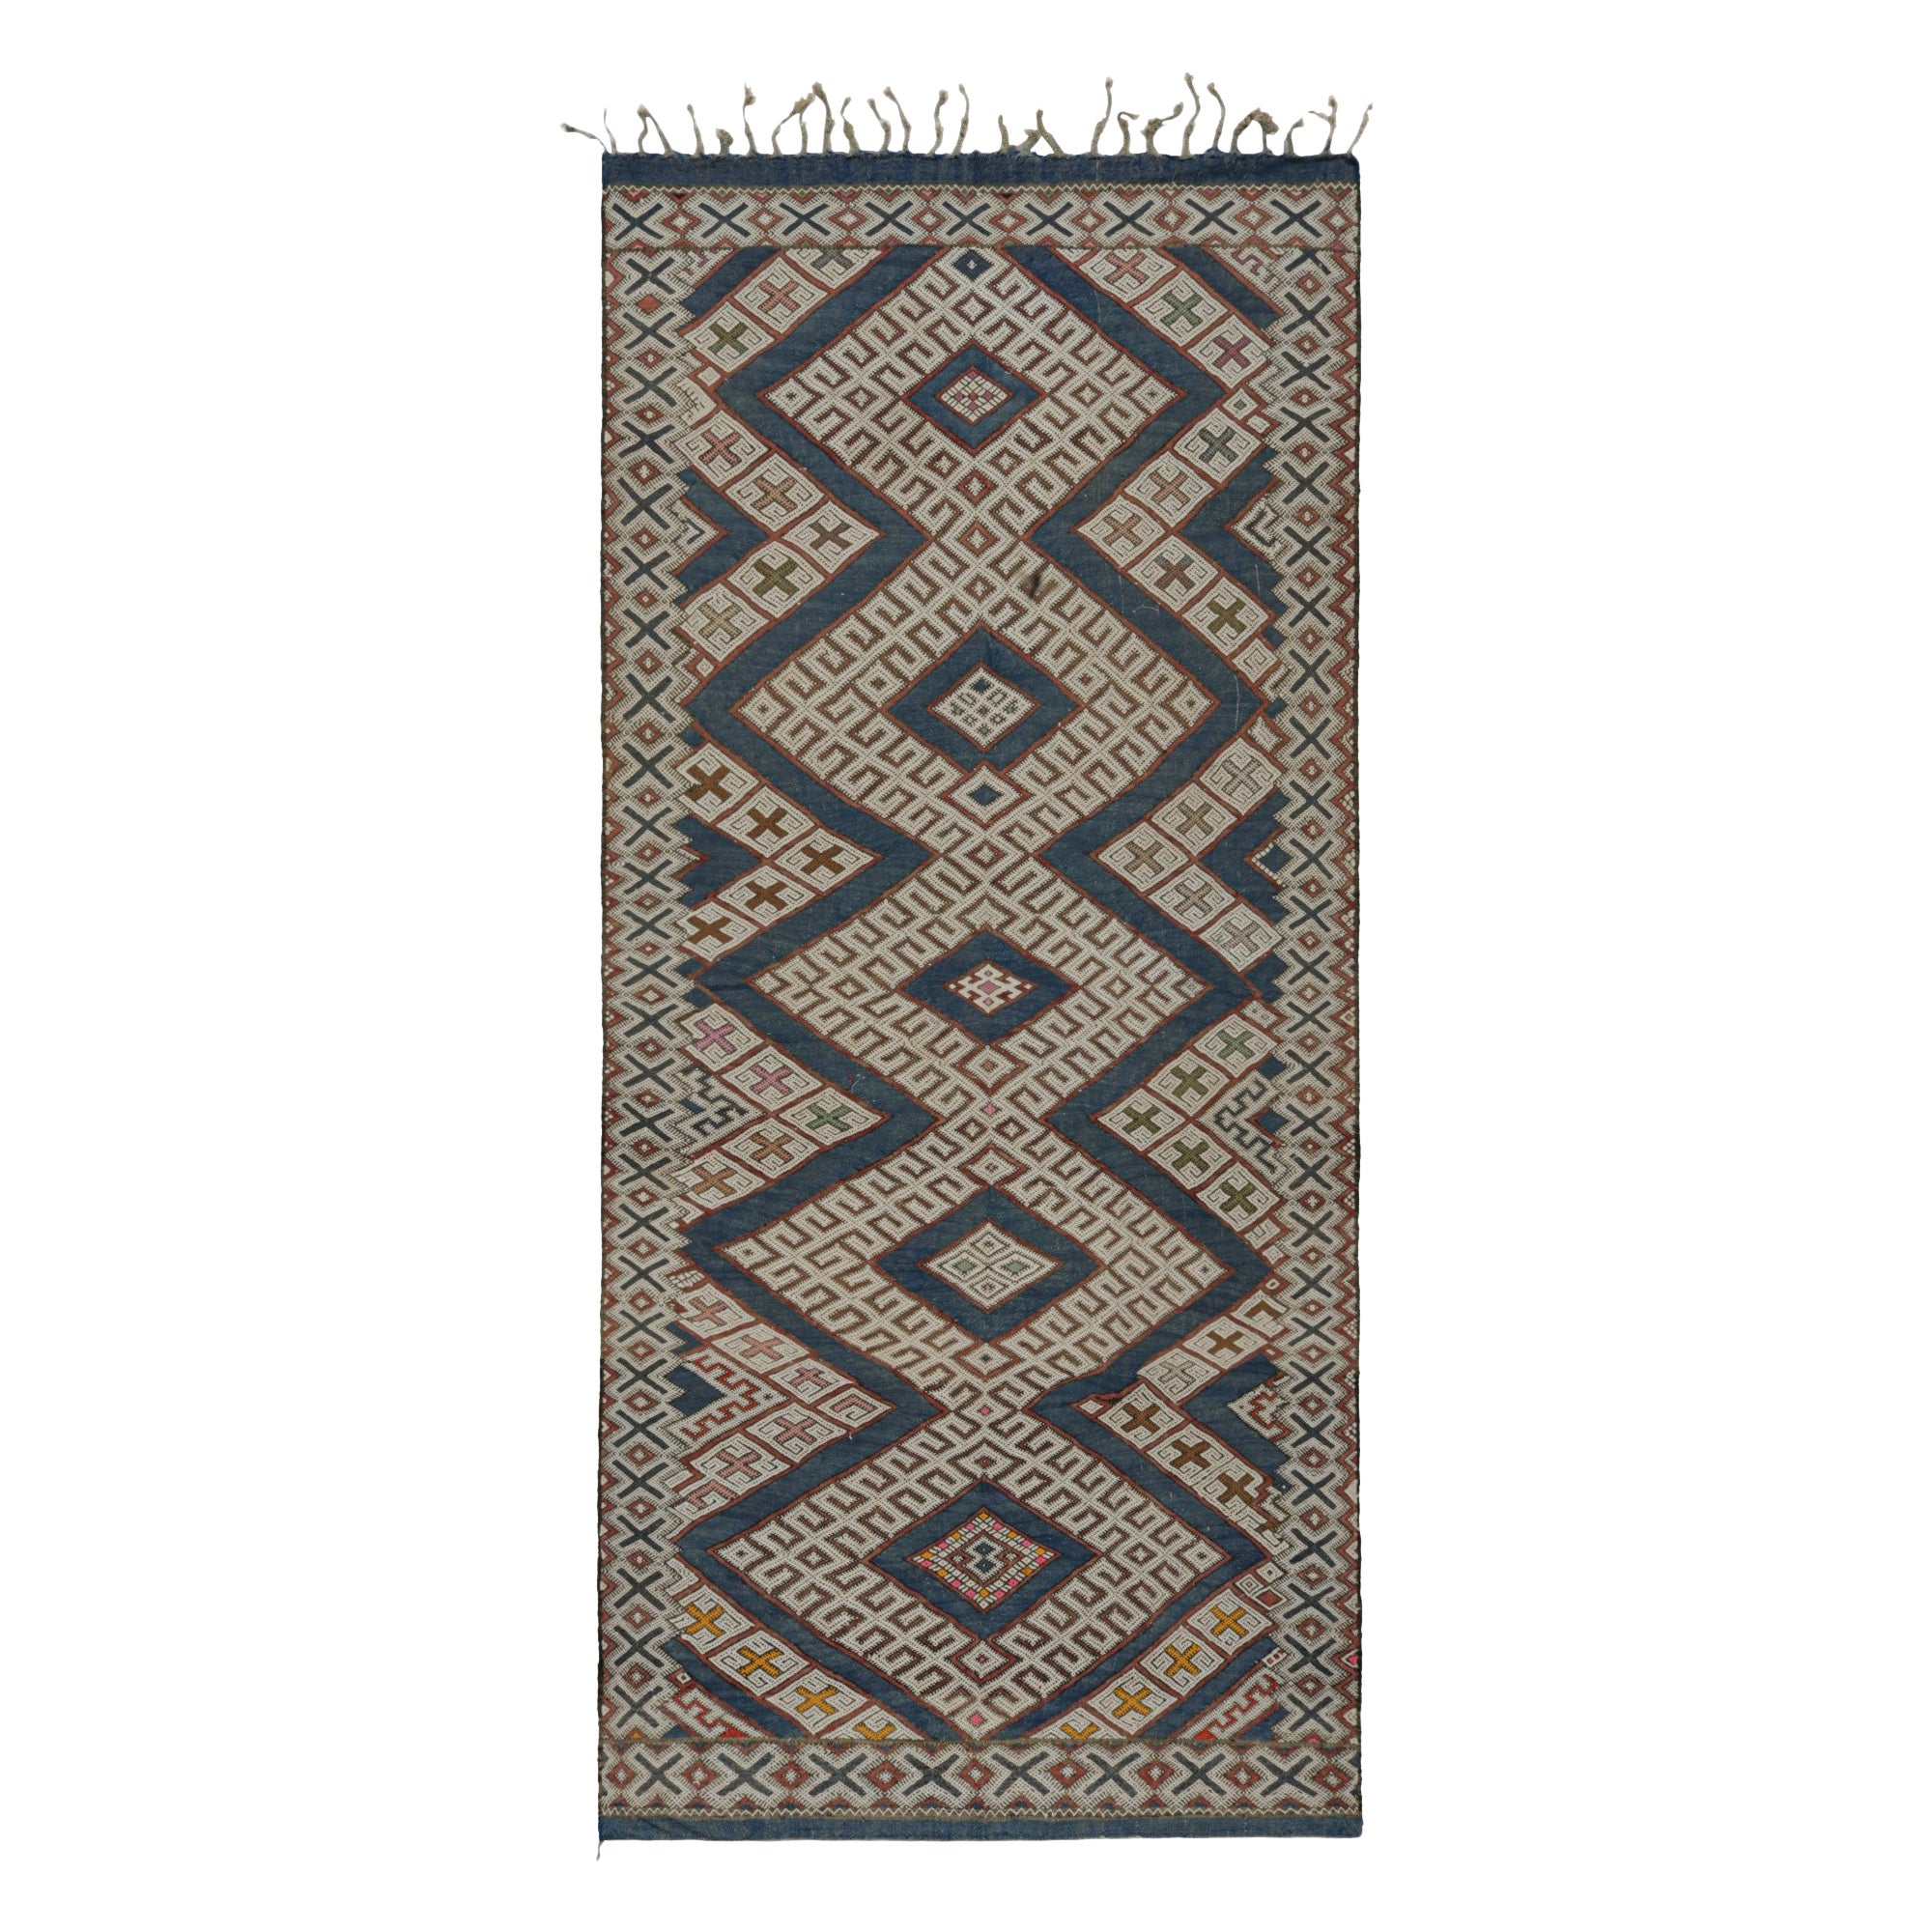 Vintage Zayane Moroccan Kilim Rug, with Geometric Patterns, from Rug & Kilim